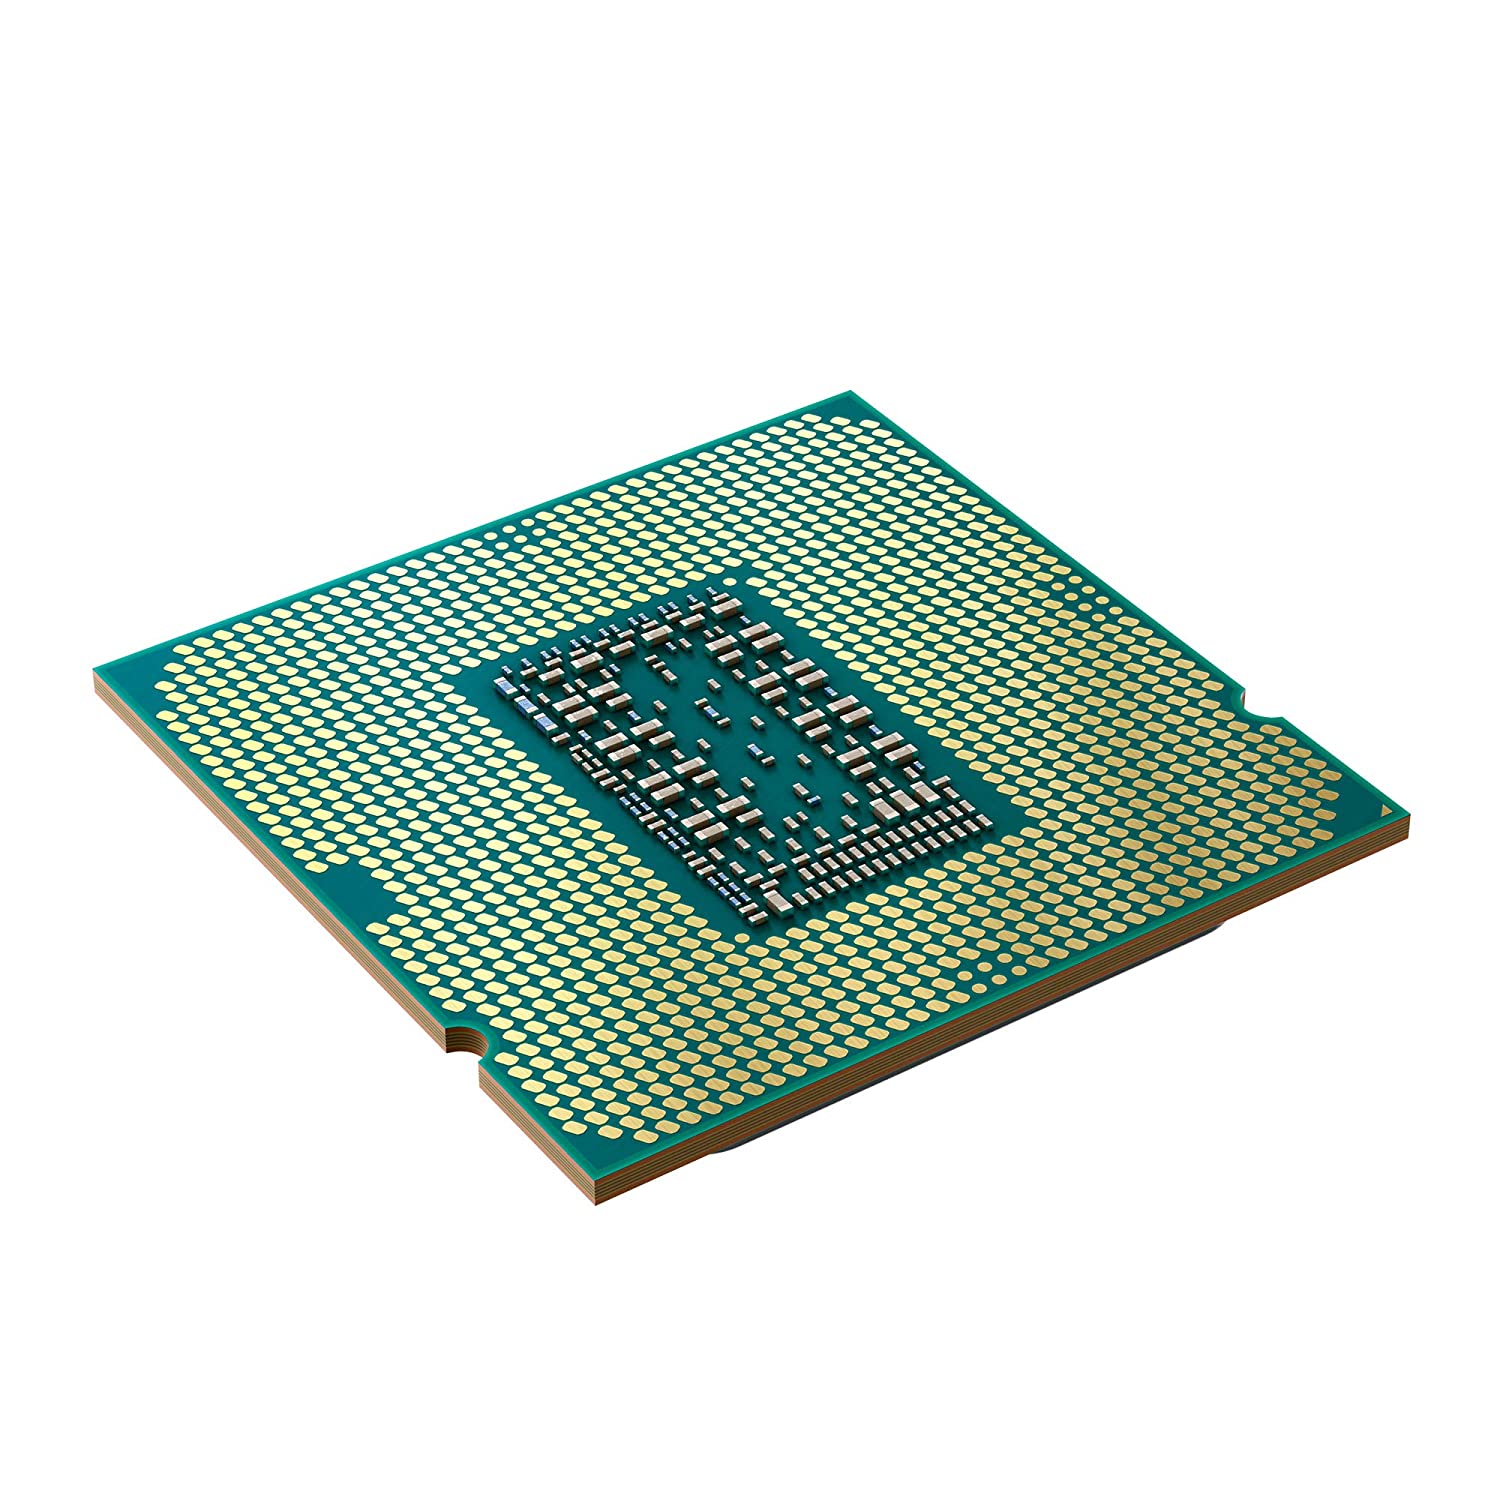 Intel Core i7-11700 Desktop Processor 8 Cores up to 4.9 GHz